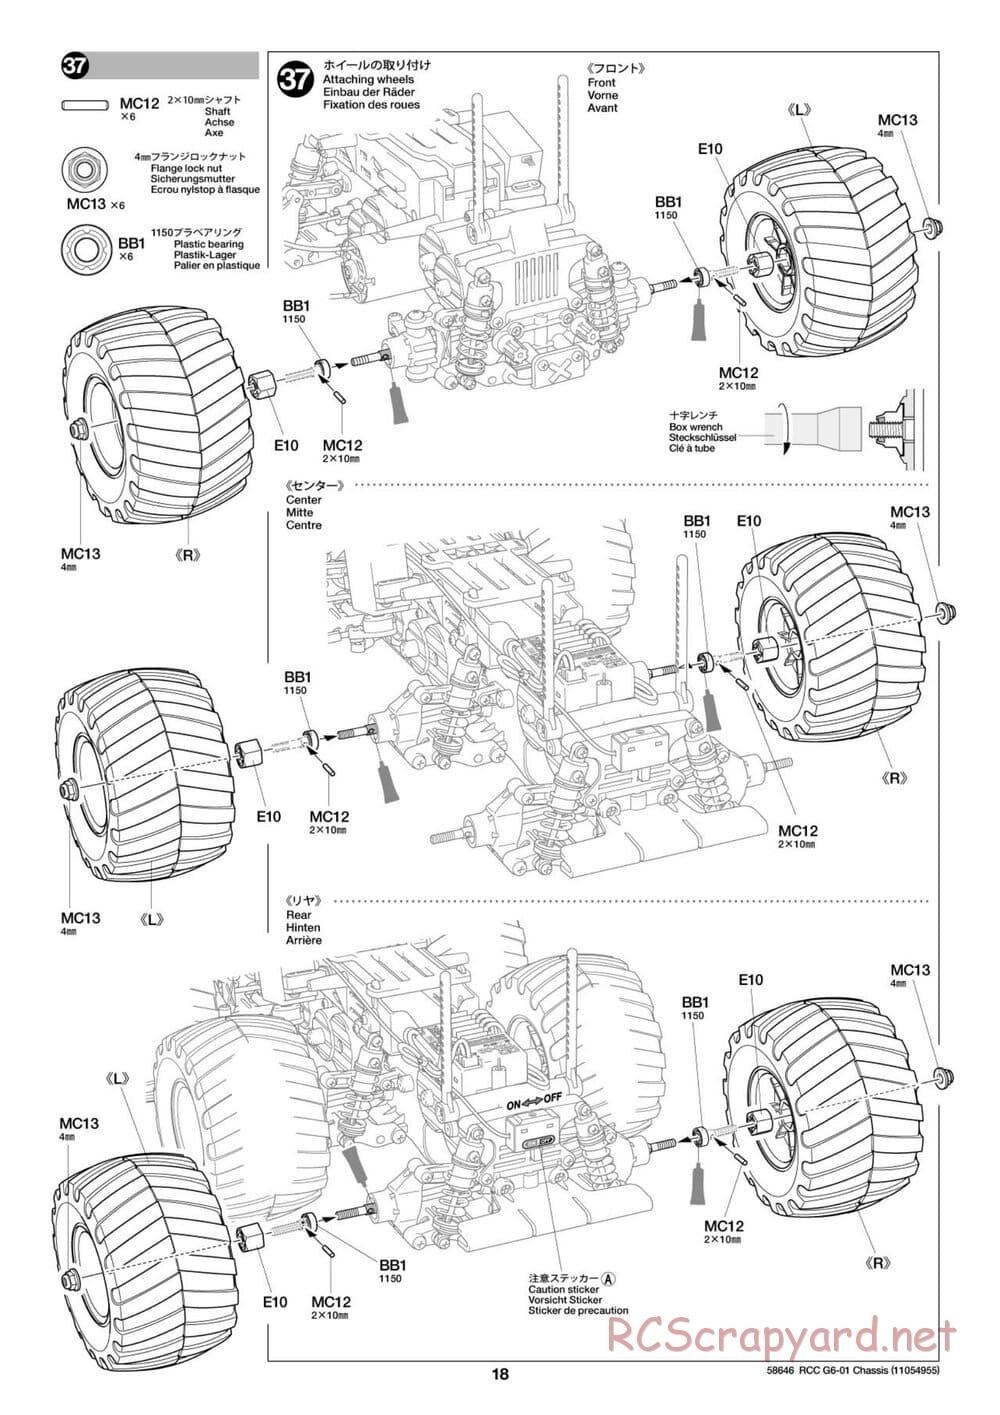 Tamiya - Konghead 6x6 - G6-01 Chassis - Manual - Page 18